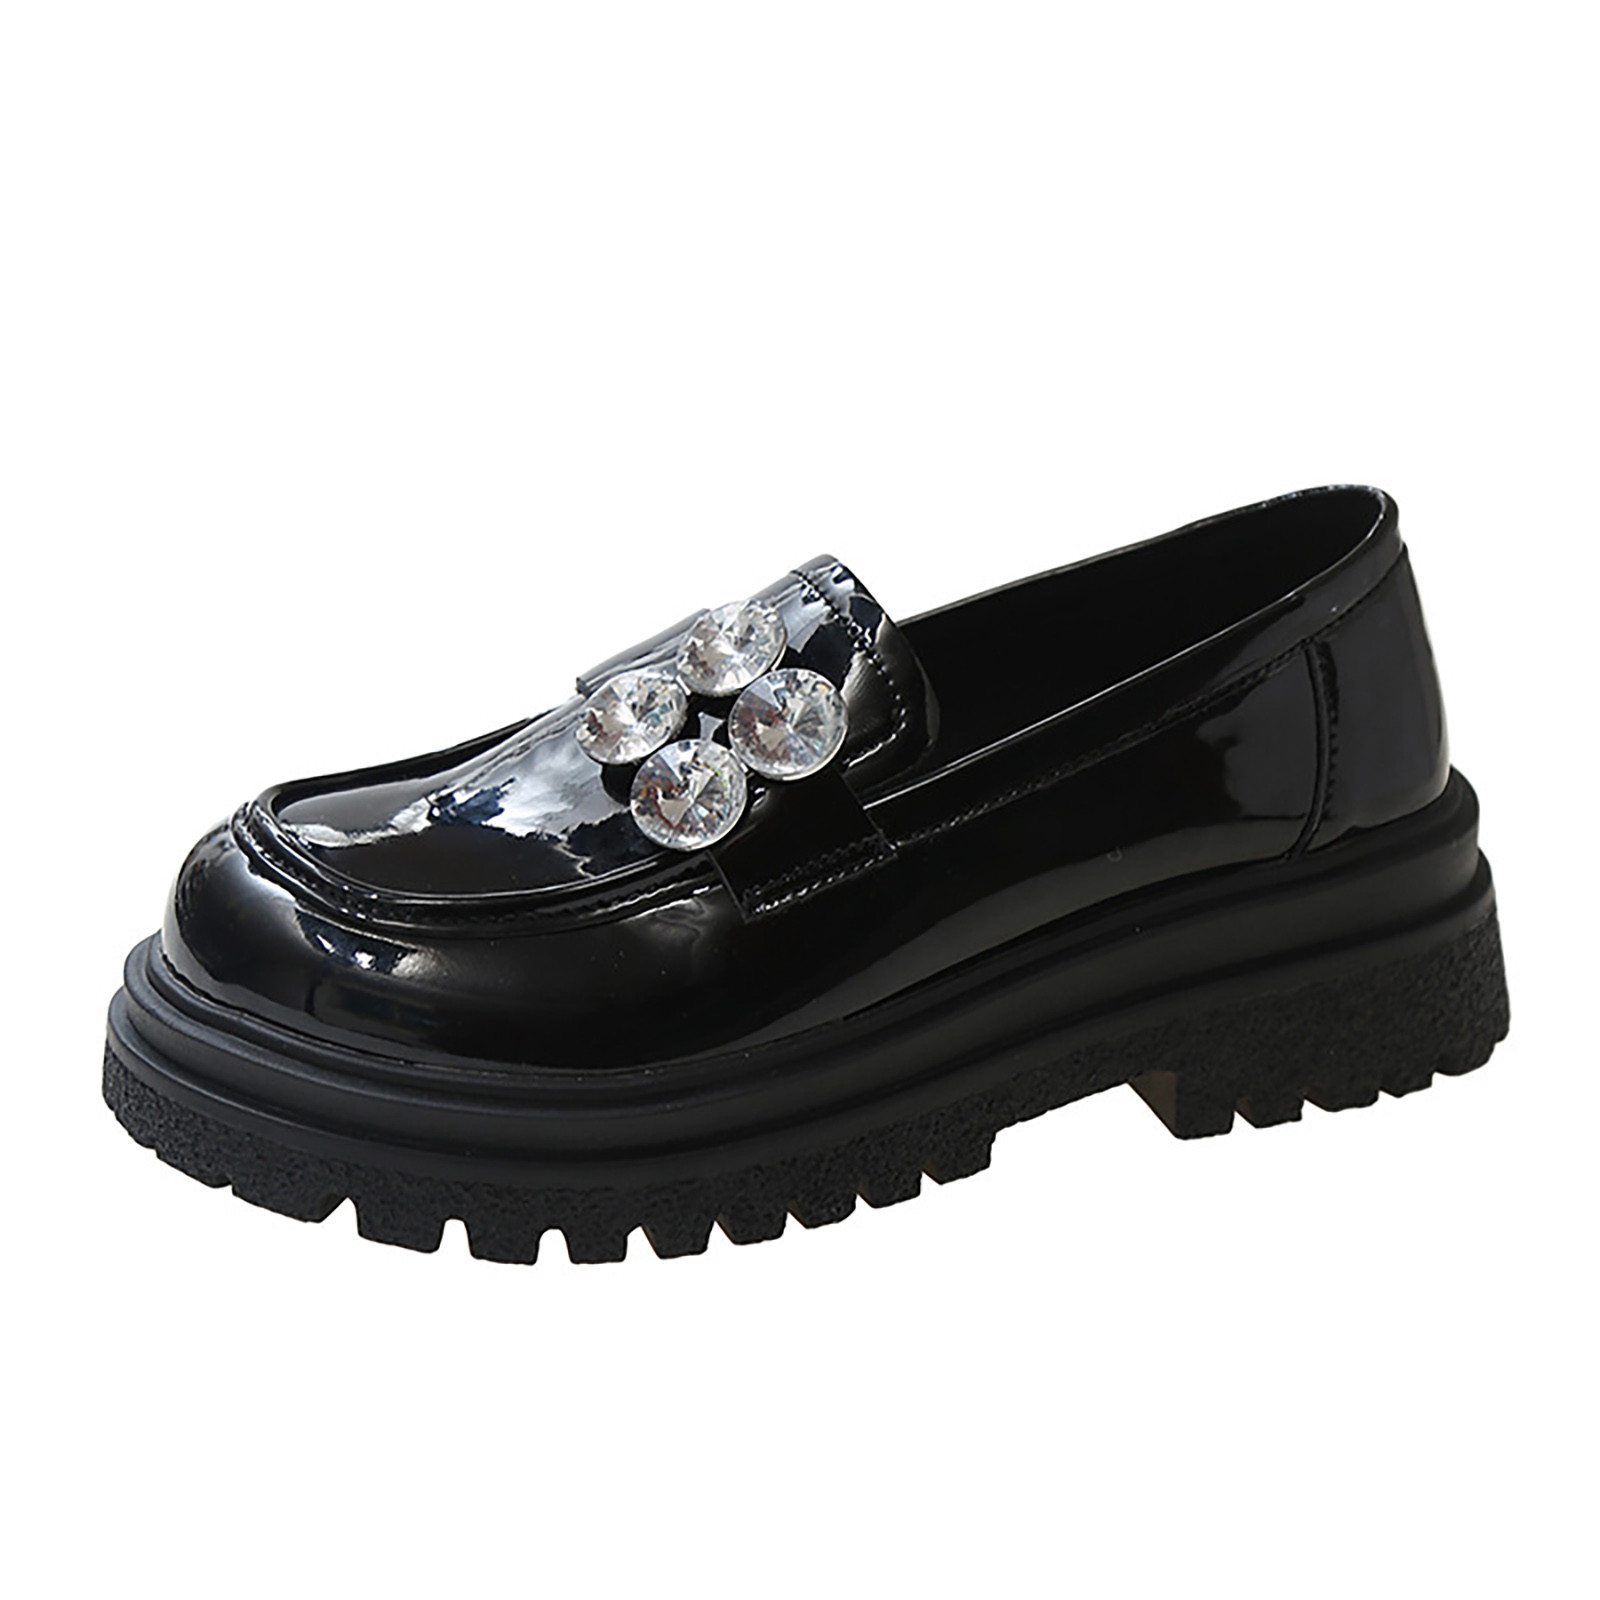 Entyinea Women's Loafers Round Toe Comfort Light Weight Slip-On Dress ...